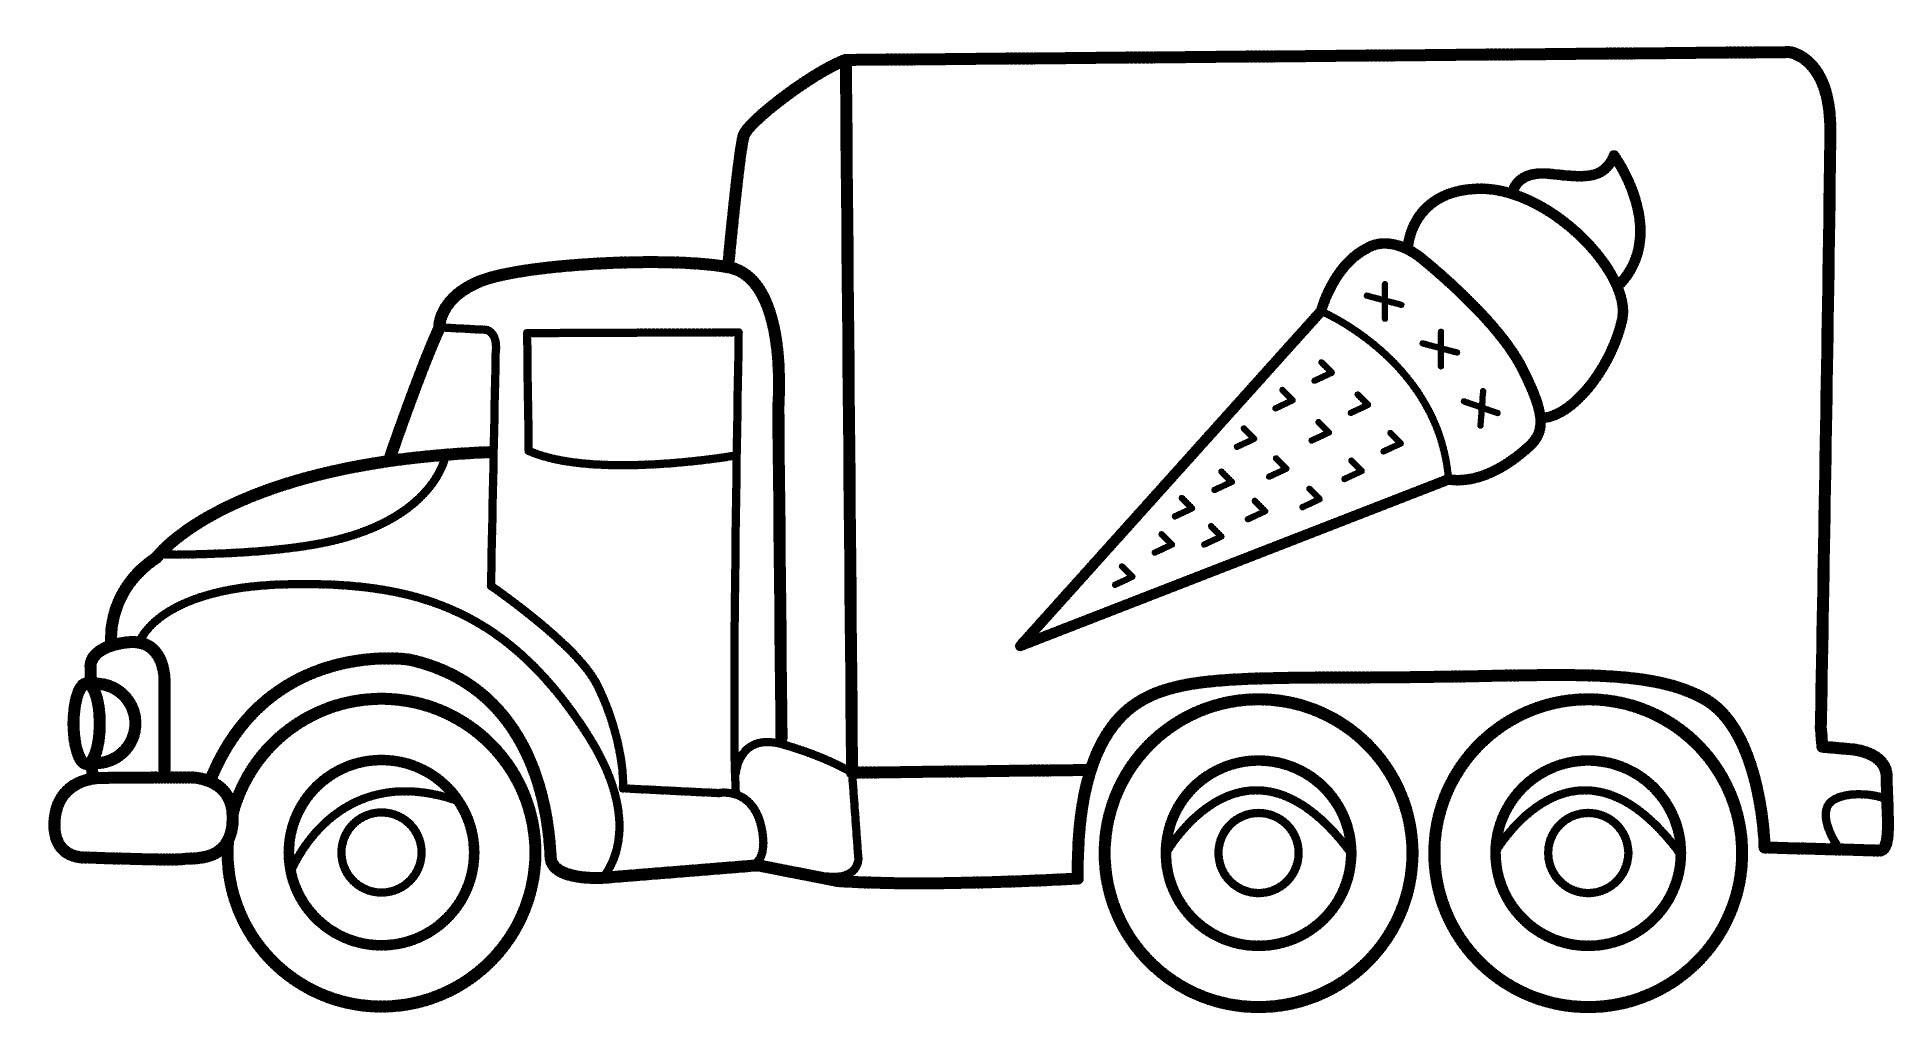 Раскраски грузовики и техника для детей